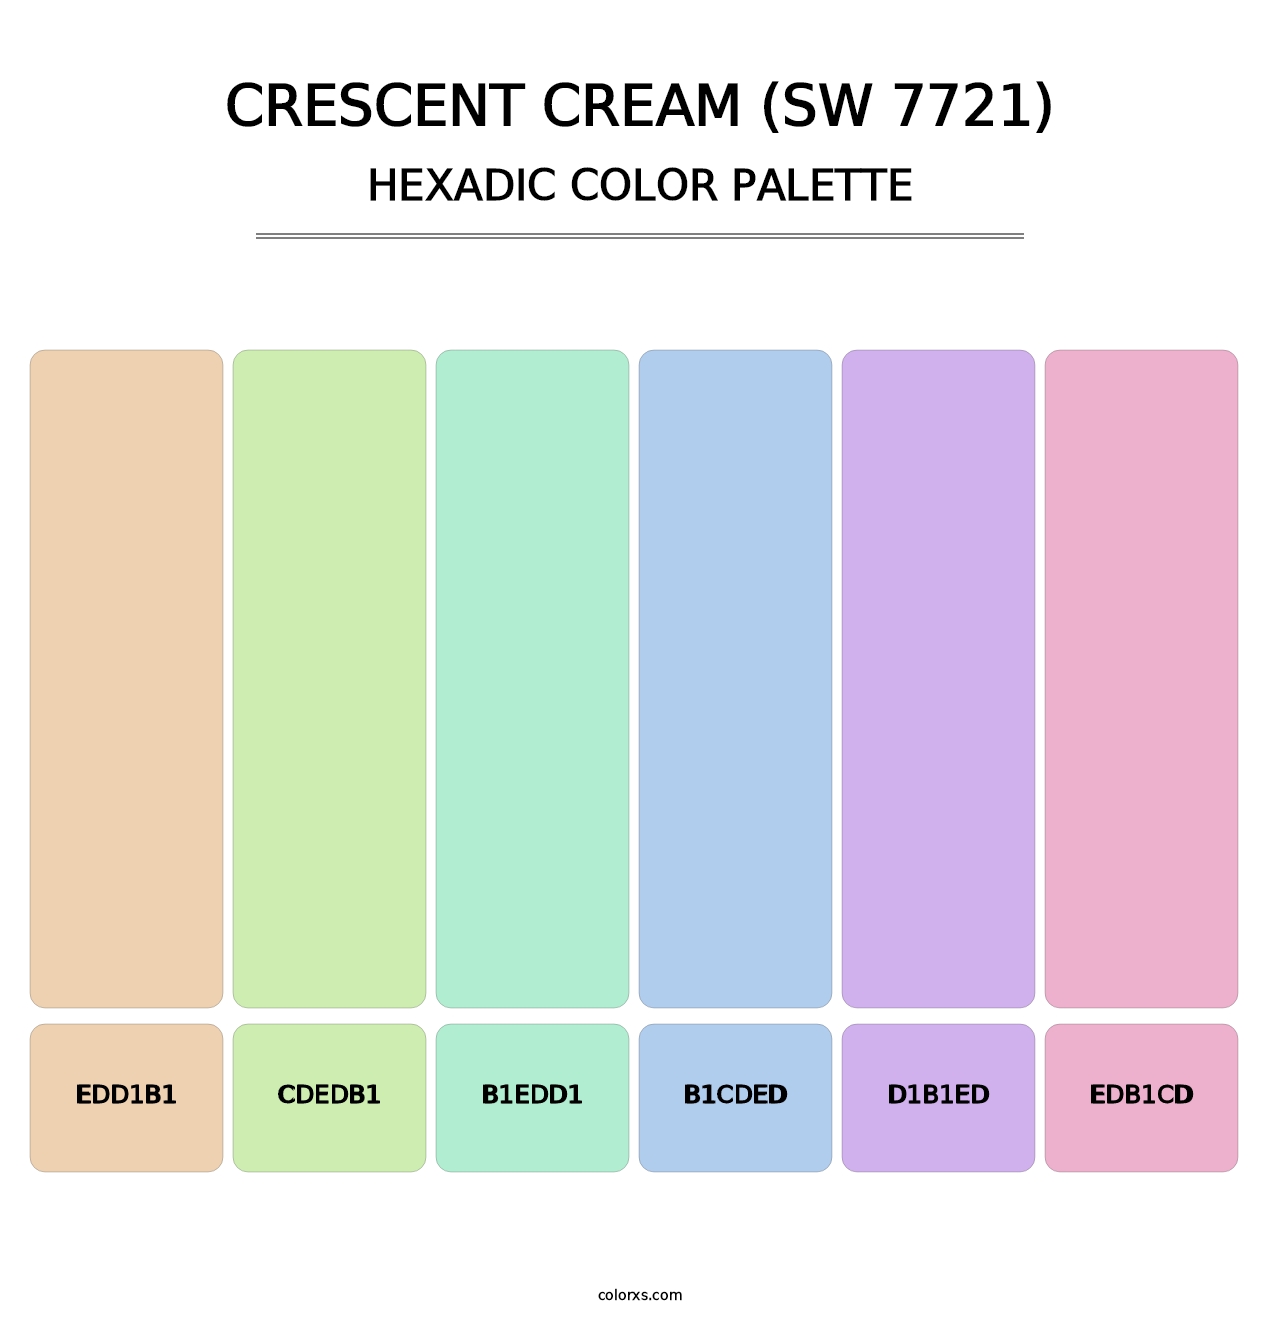 Crescent Cream (SW 7721) - Hexadic Color Palette